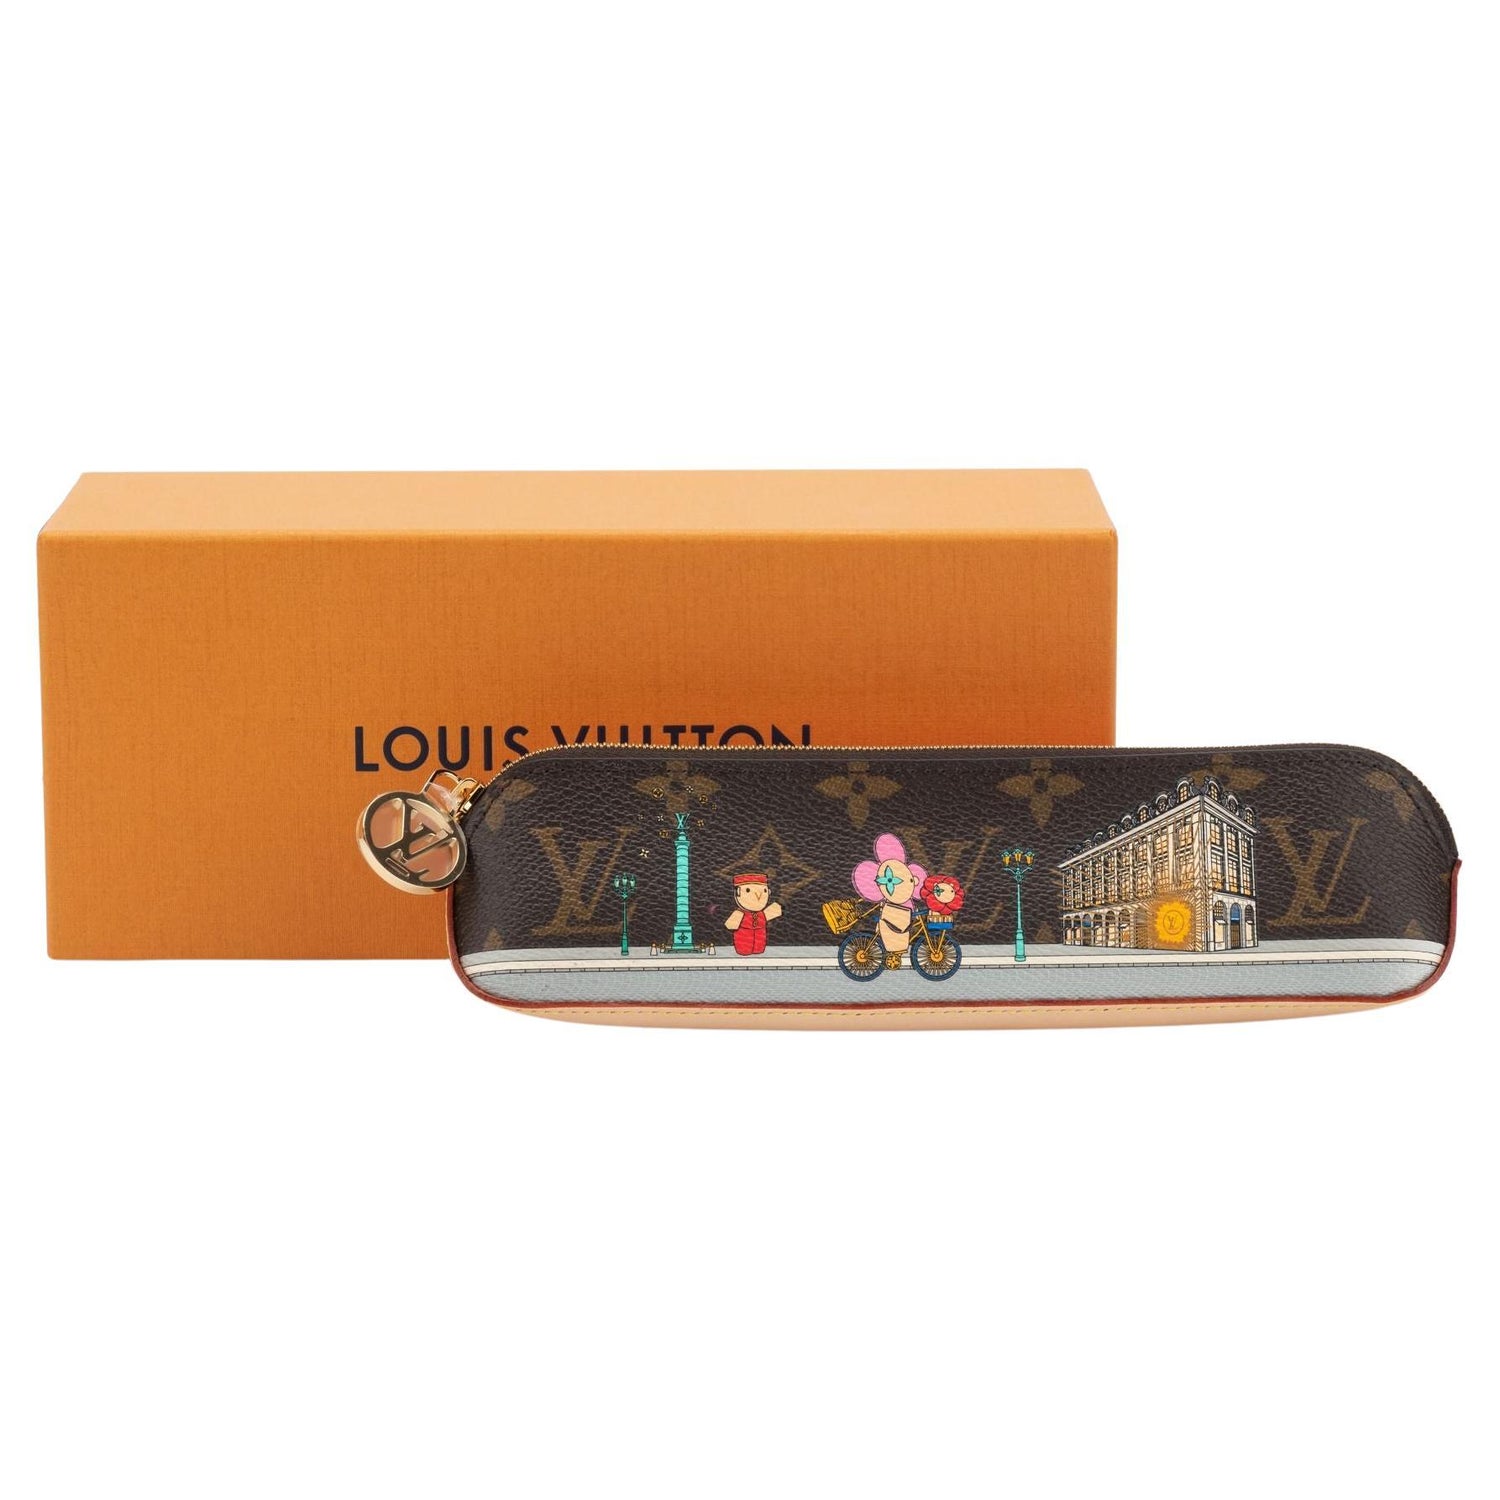 BRAND NEW Louis Vuitton Etui Stylo Monogram Pen Pencil Case – The